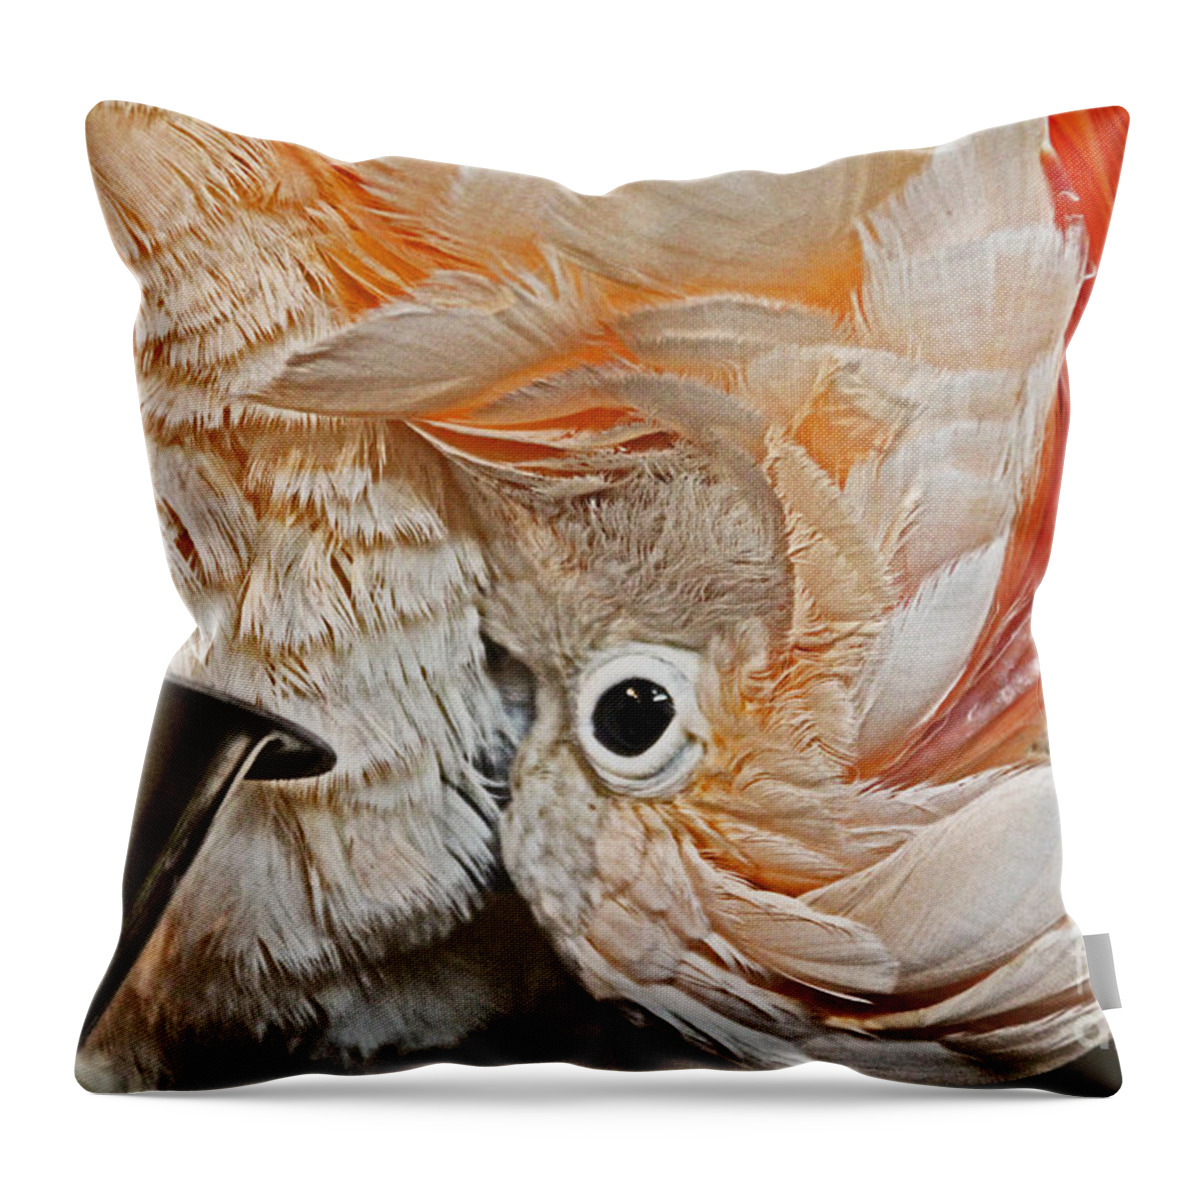 Bird Throw Pillow featuring the photograph Parrot by David Frederick